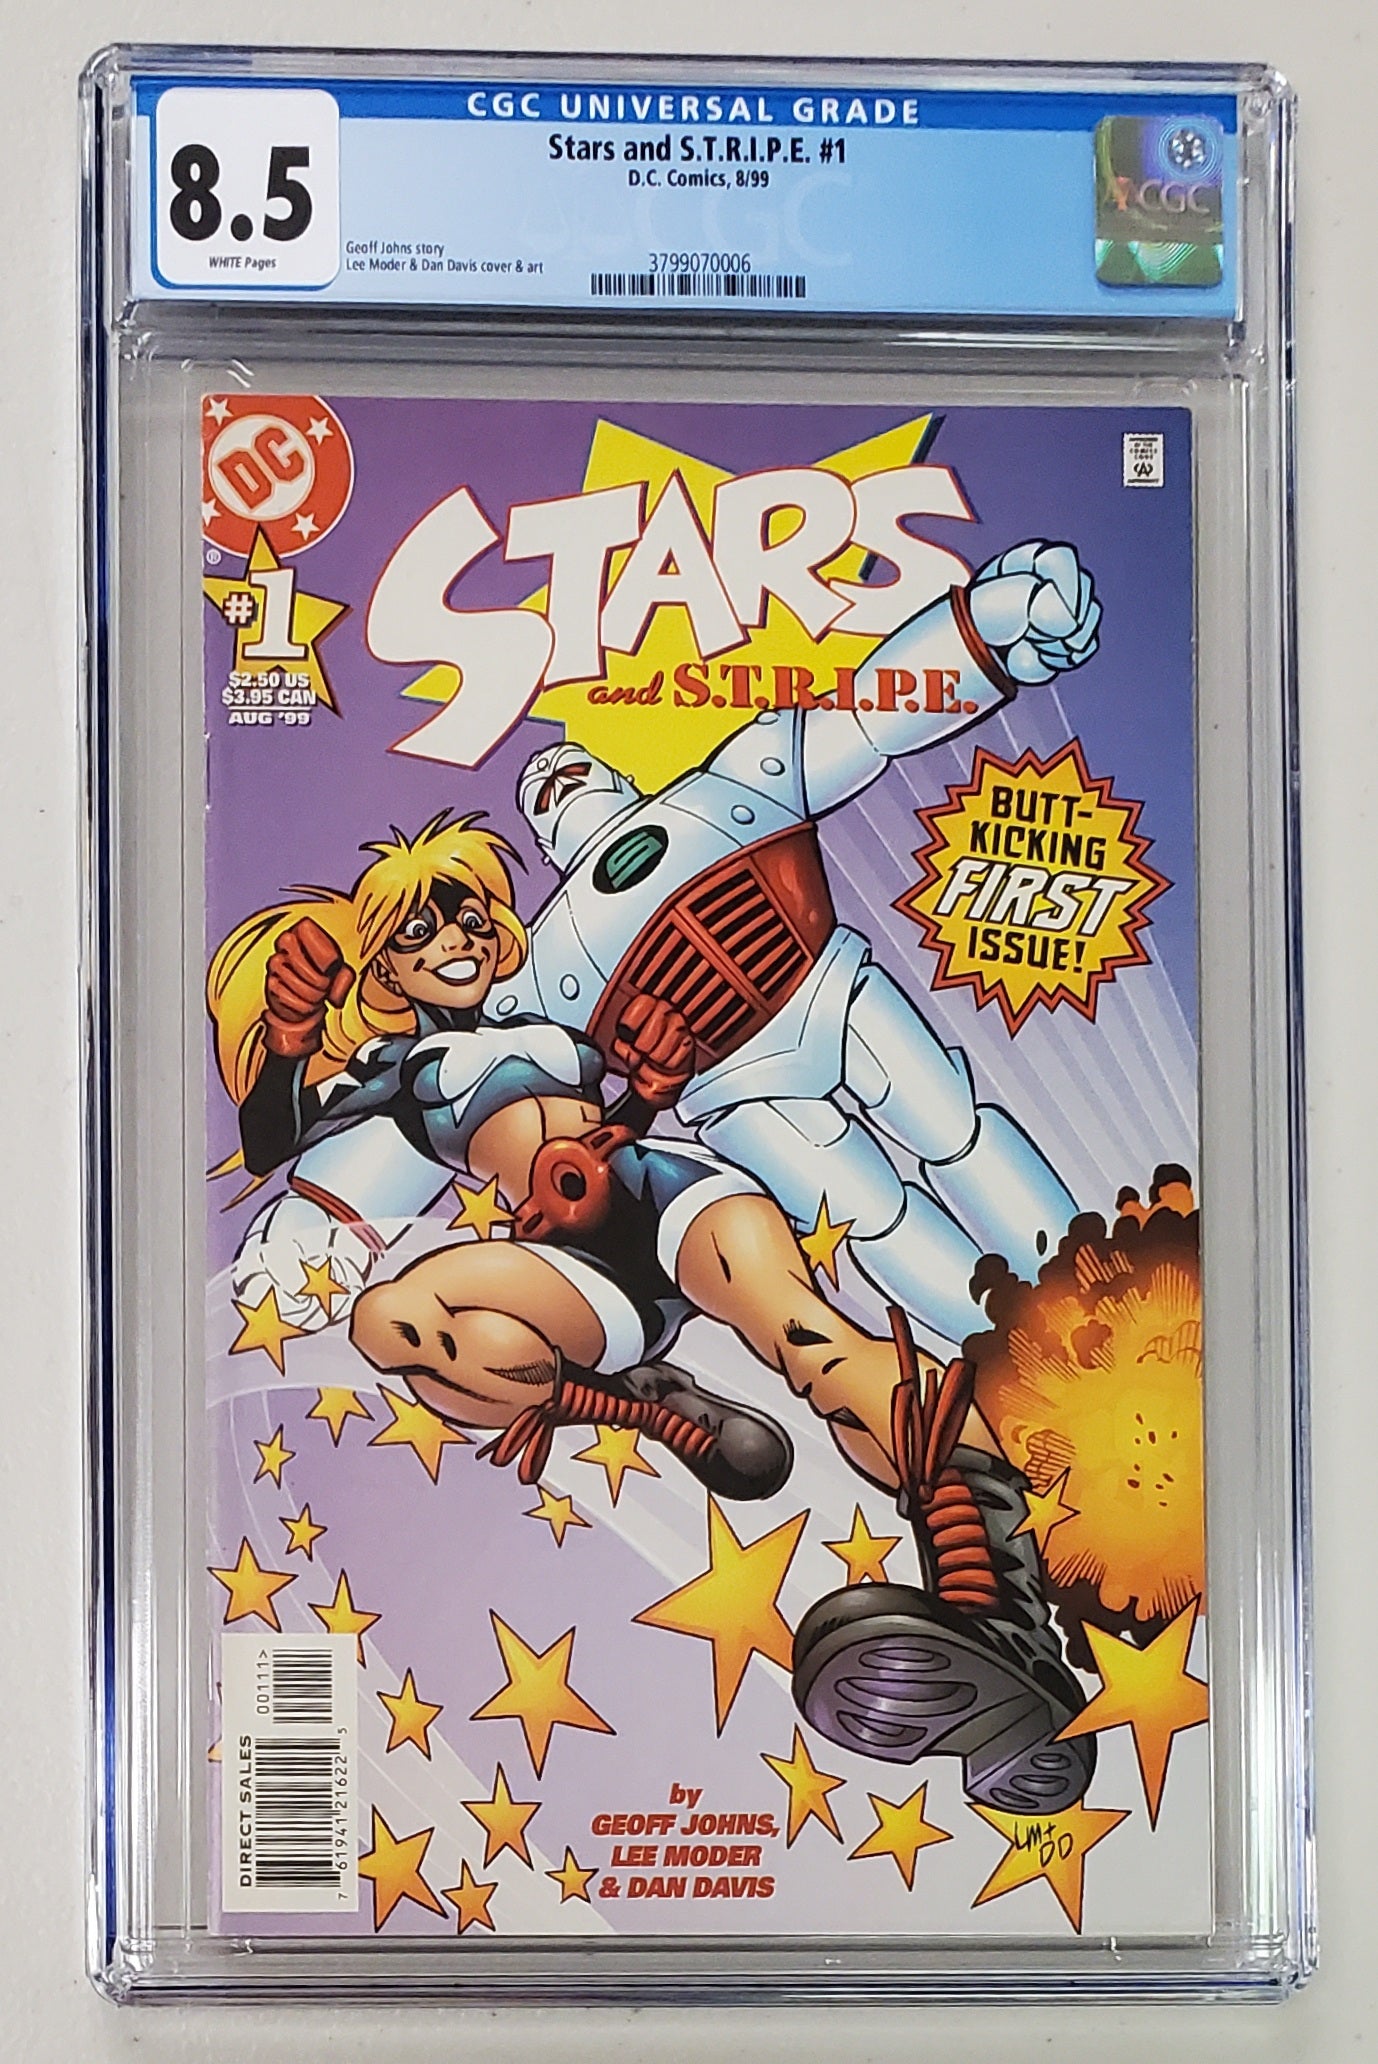 8.5 CGC STARS & STRIPE #1 1999 [3799070006]